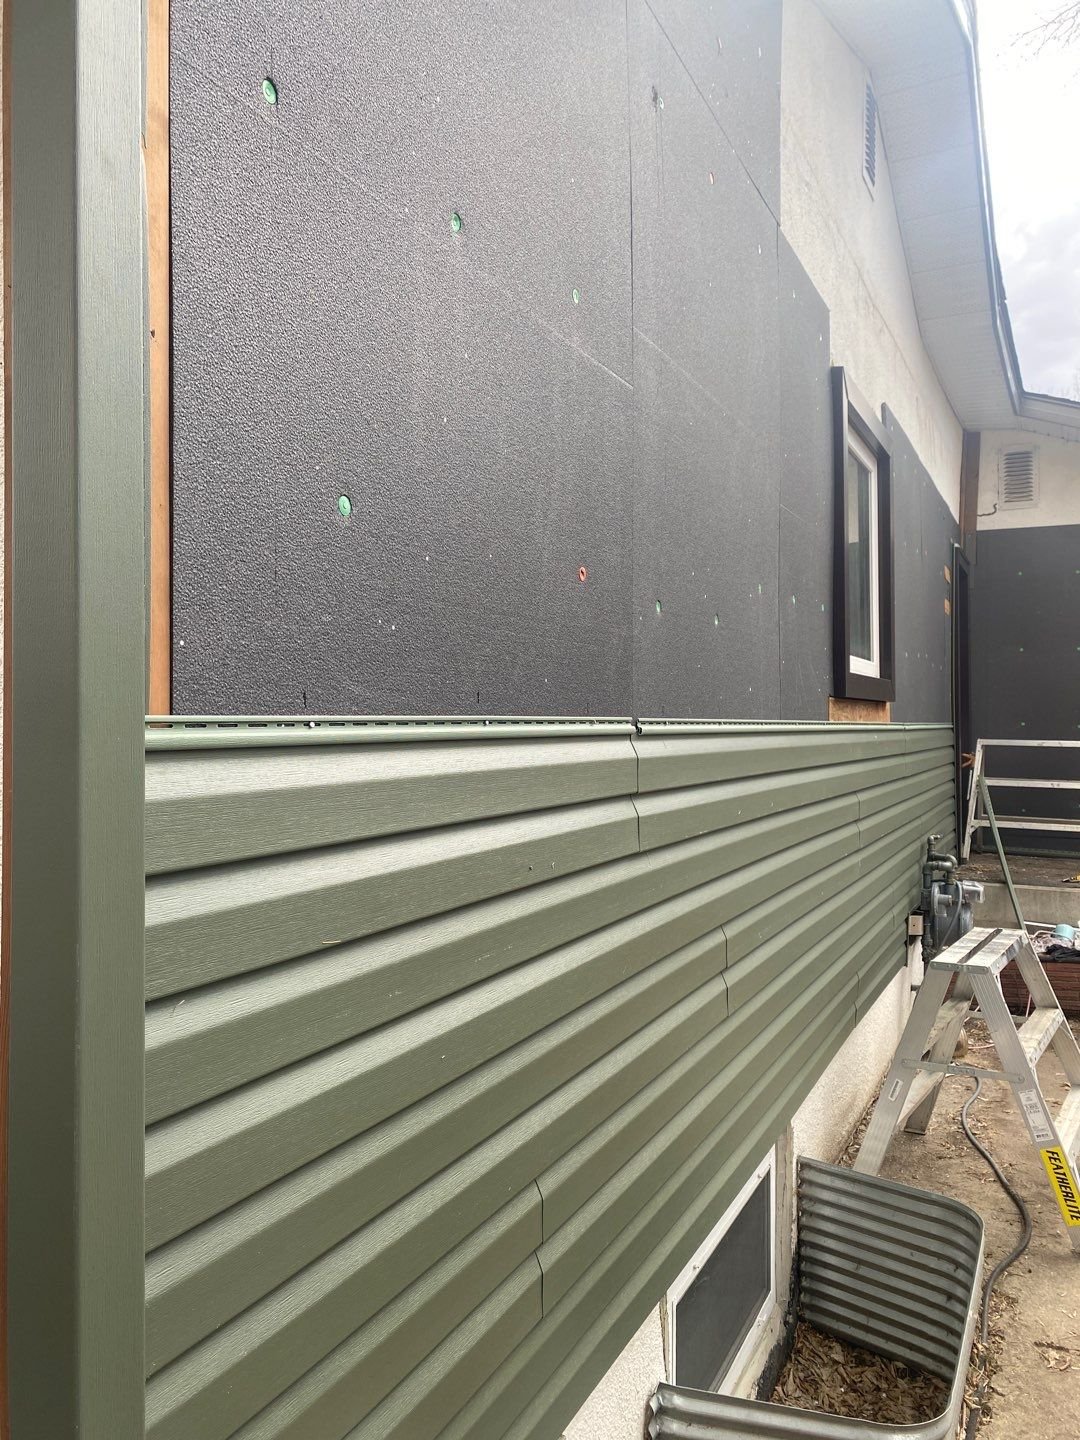 vinyl siding and insulation over stucco.jpg